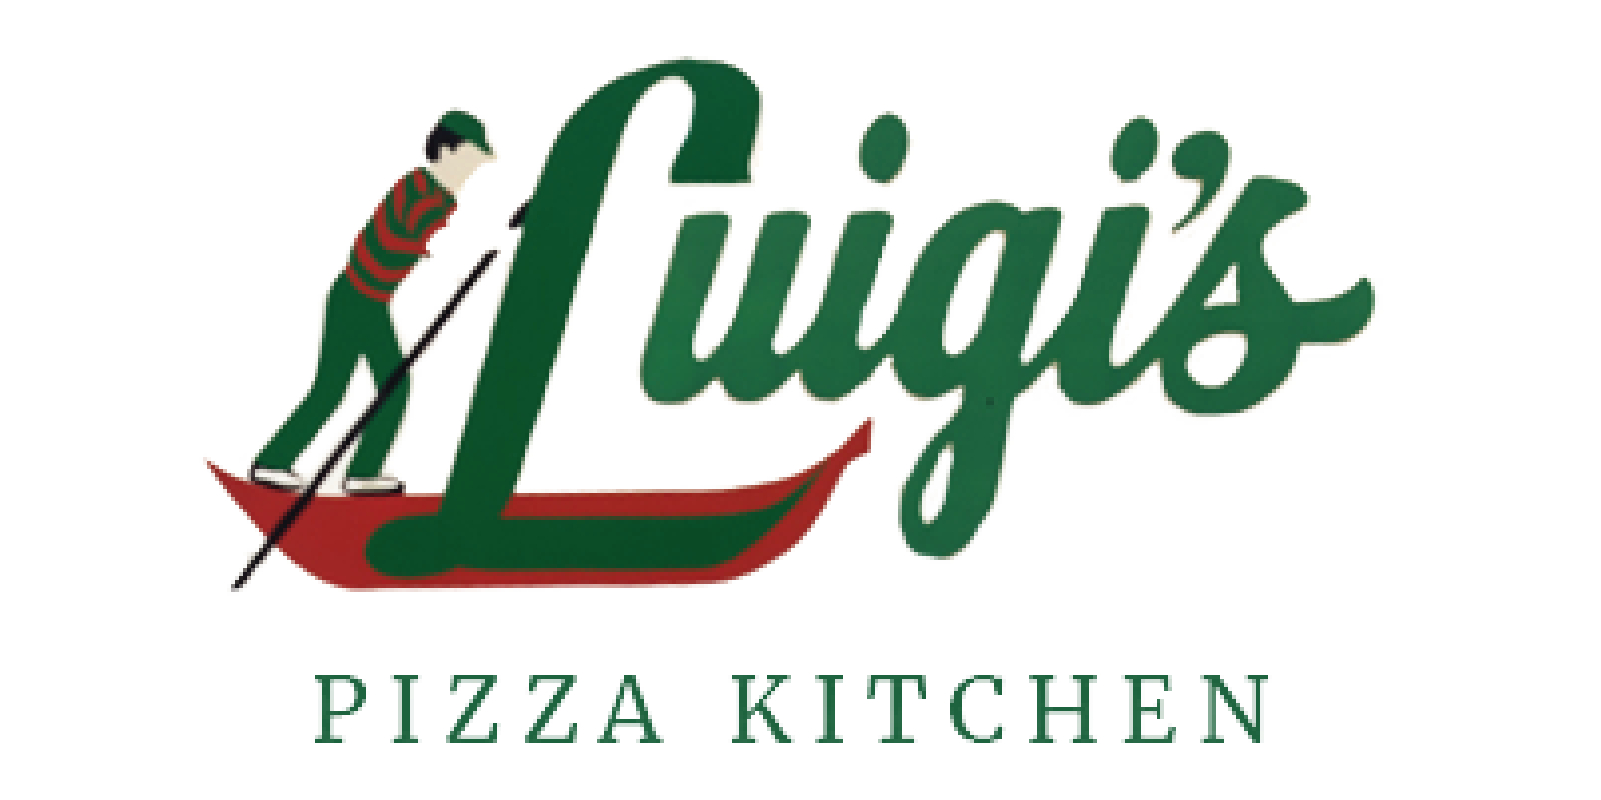 luigi's pizza kitchen, page 1 club, the gratzi